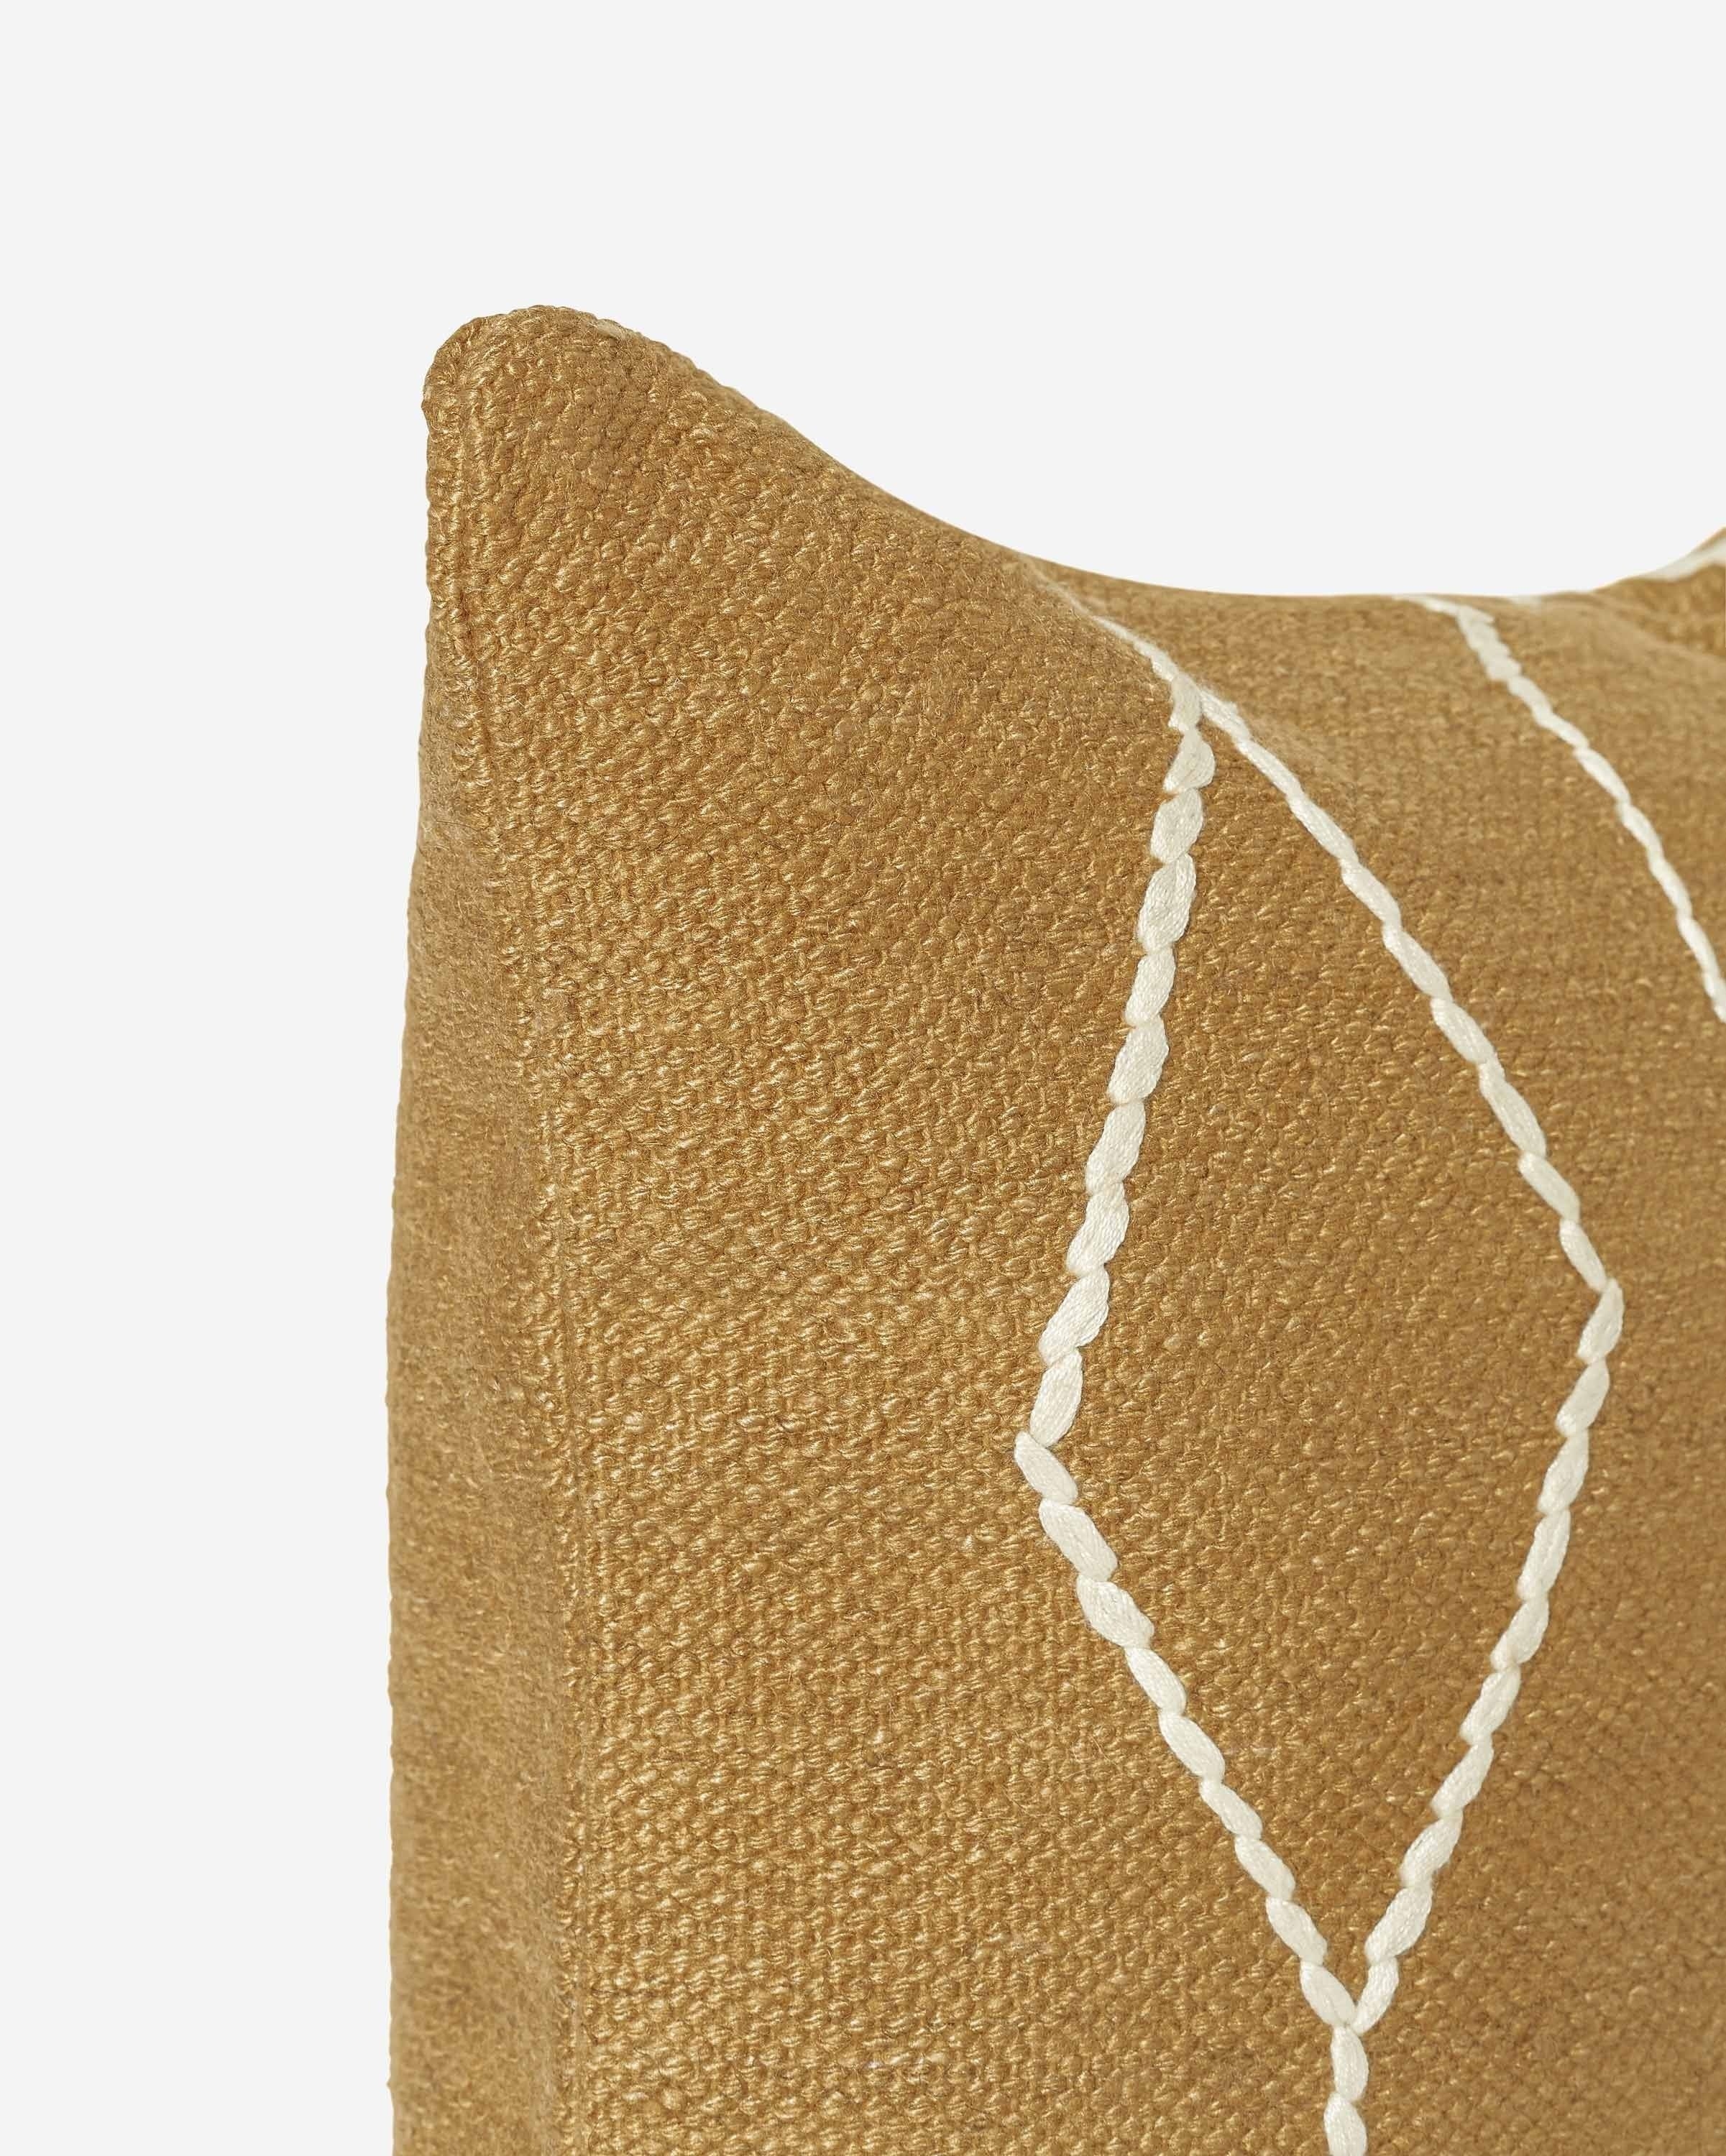 Moroccan Flatweave Pillow By Sarah Sherman Samuel - Black and Natural / 12" x 20" - Image 12